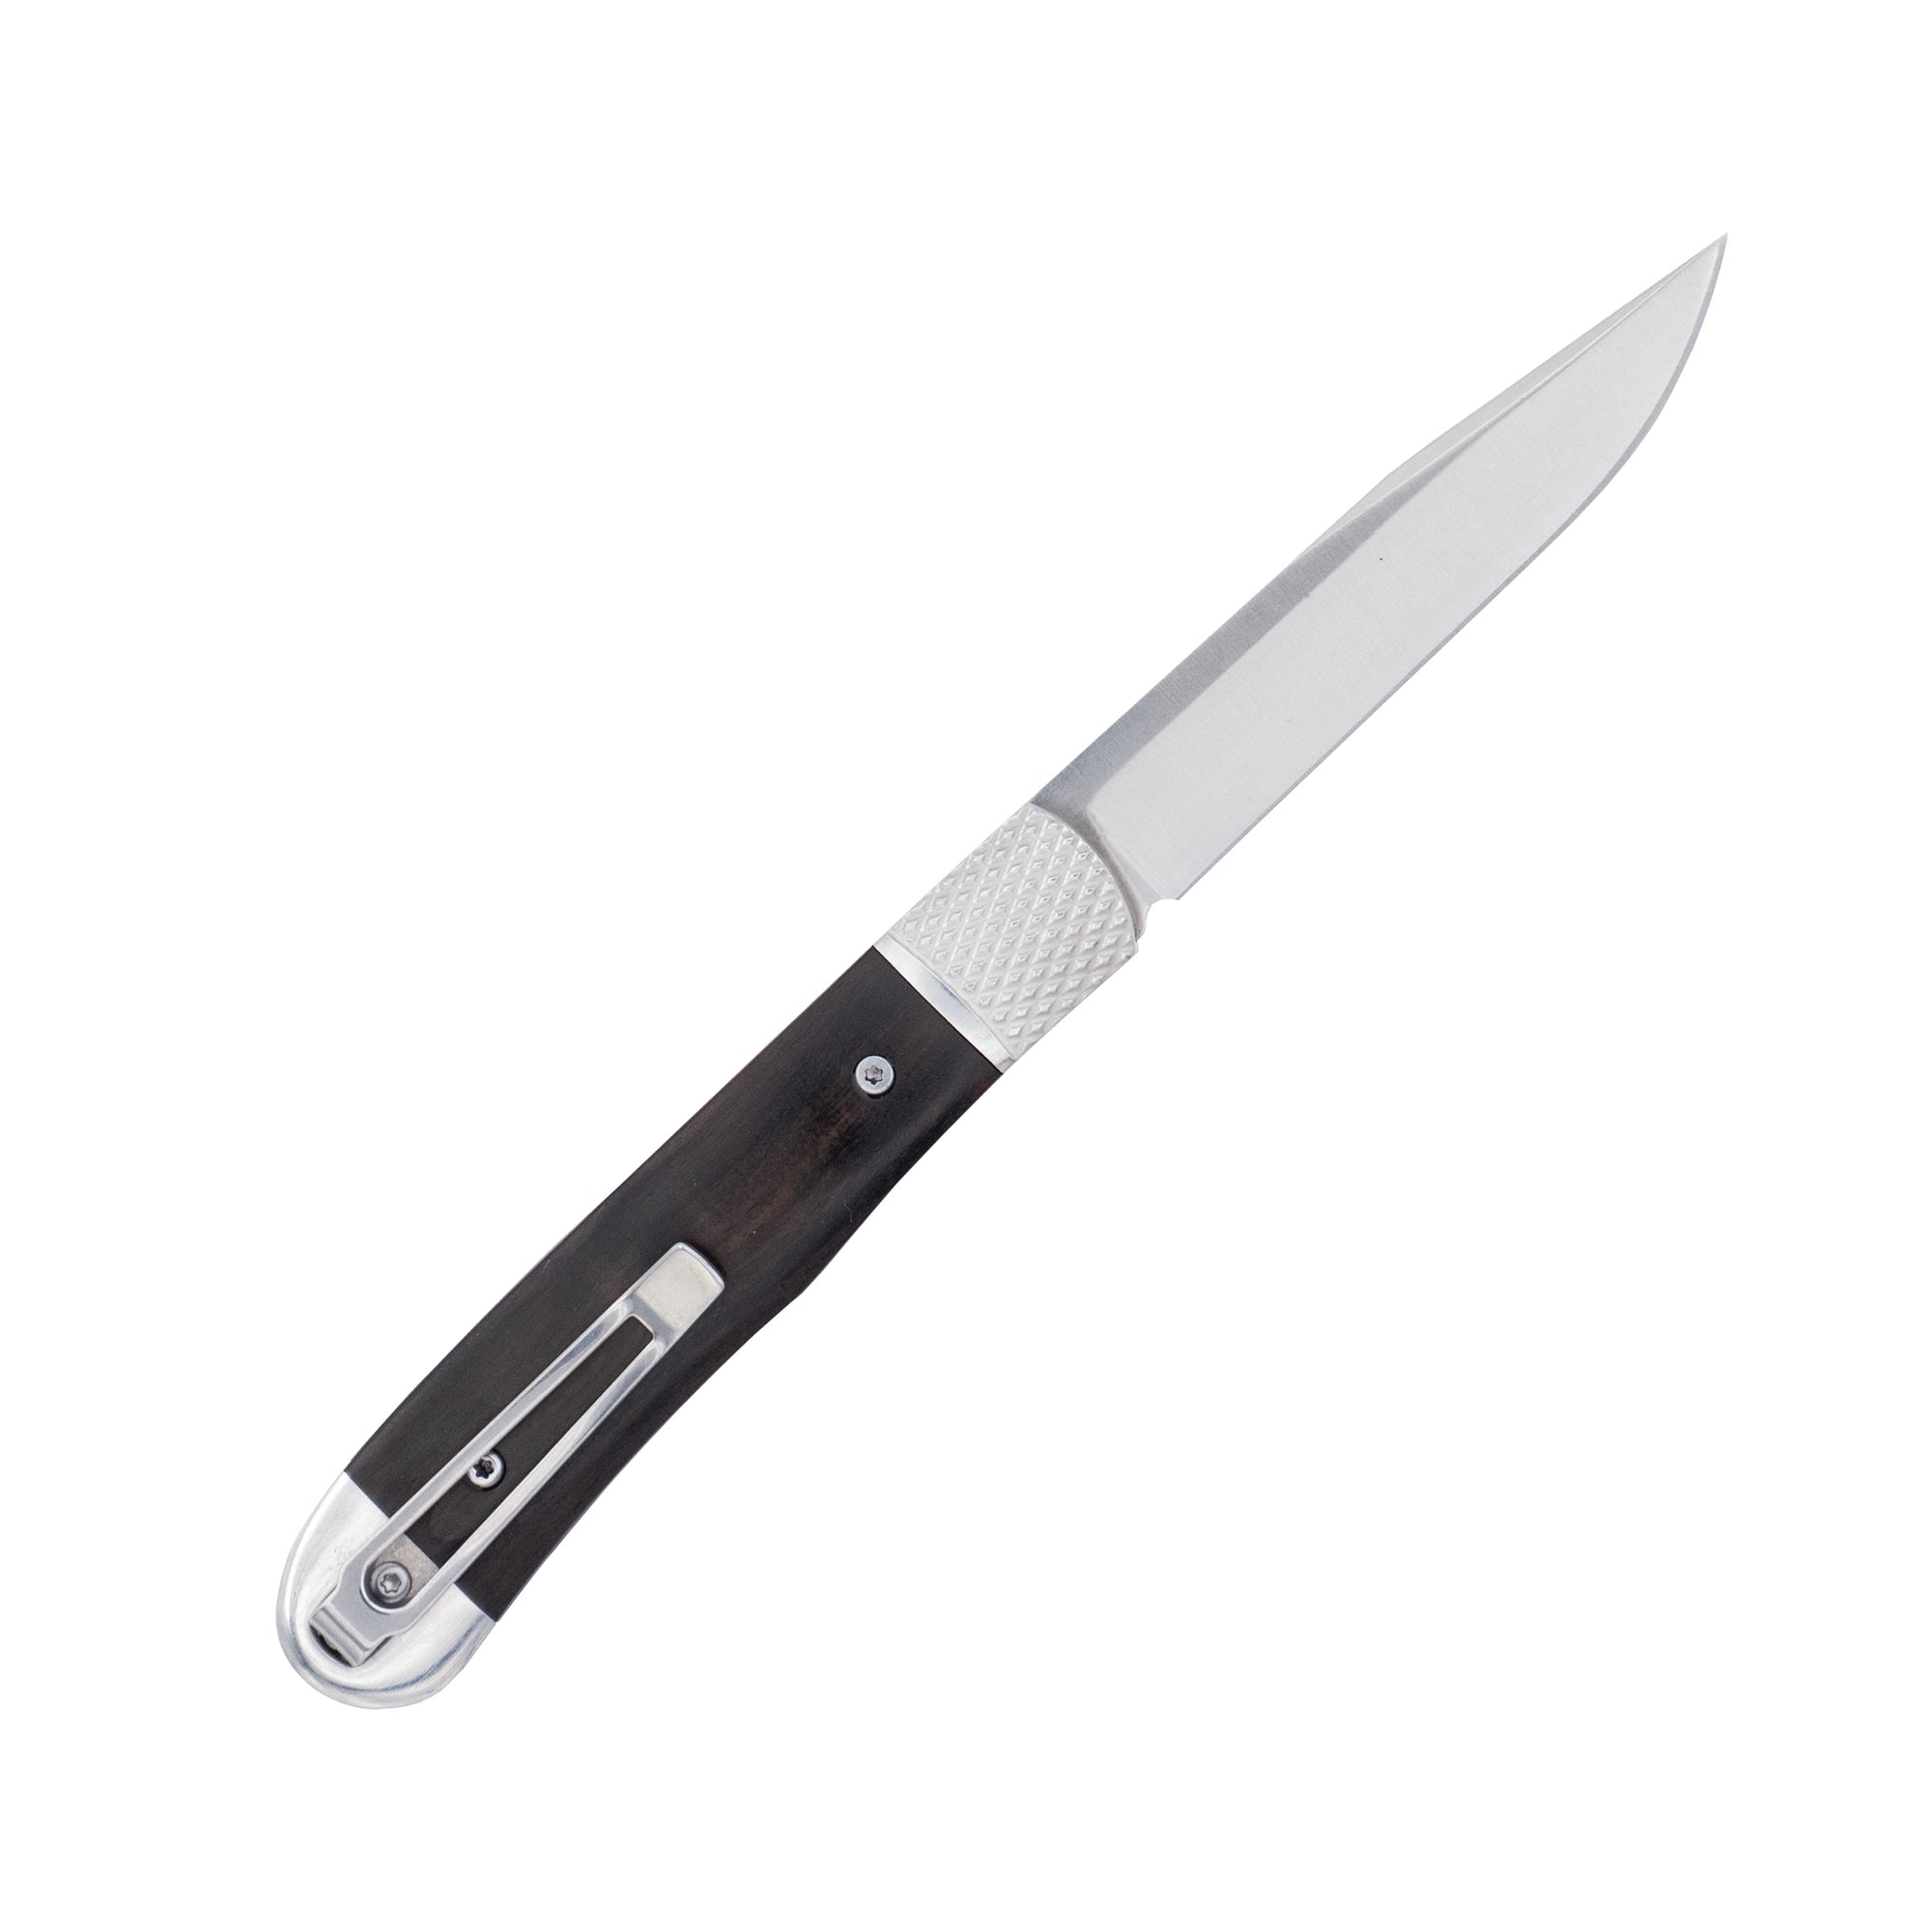 New knife, new knife slip! 3.38 black diamond irons, 0.6 ritza